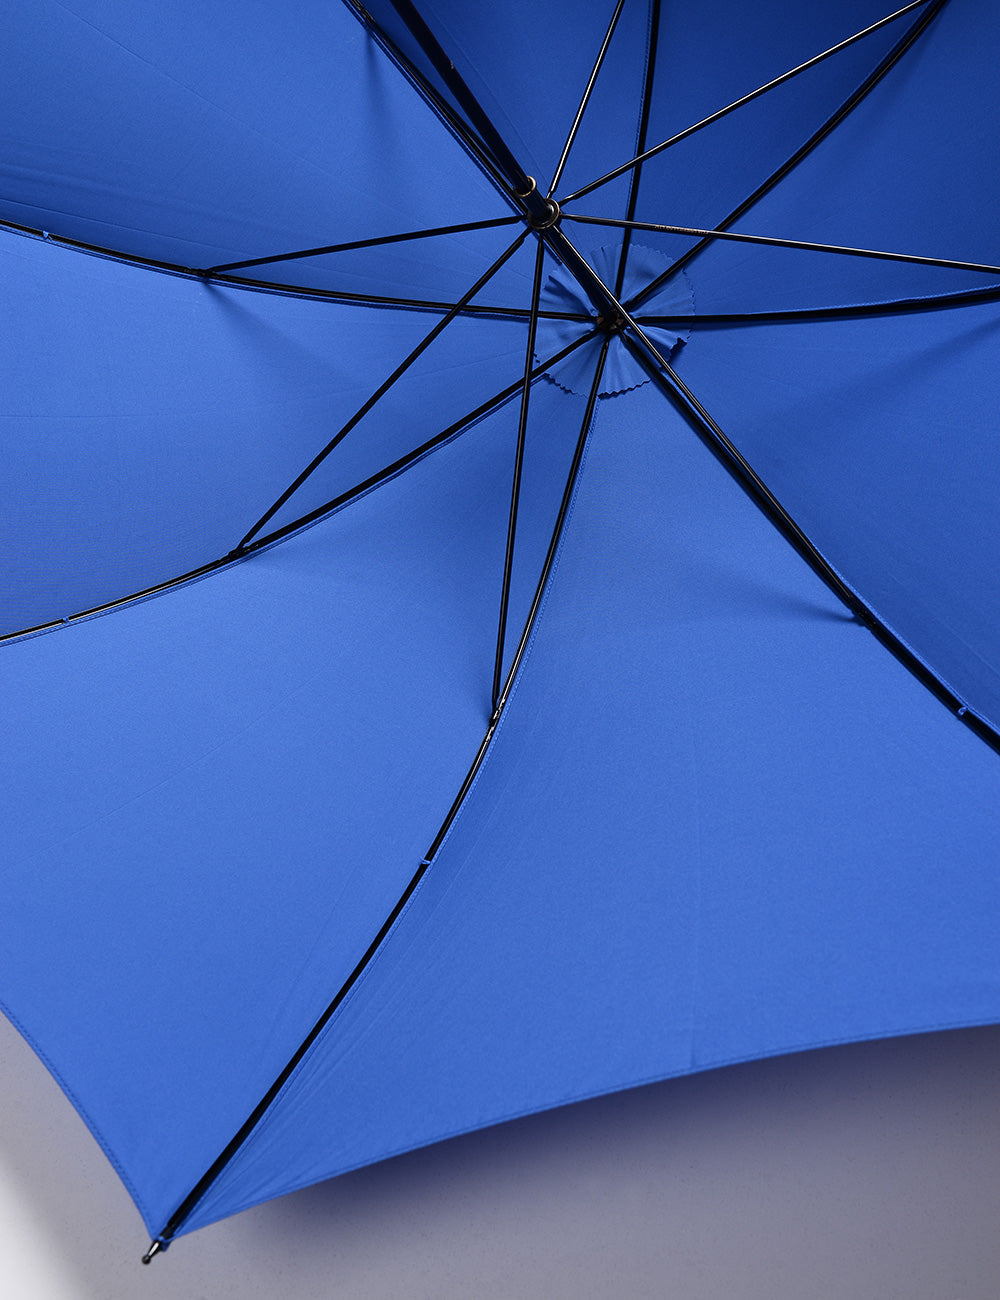 Opened detail of GT1 Gentleman Tube Umbrella in Royal Blue